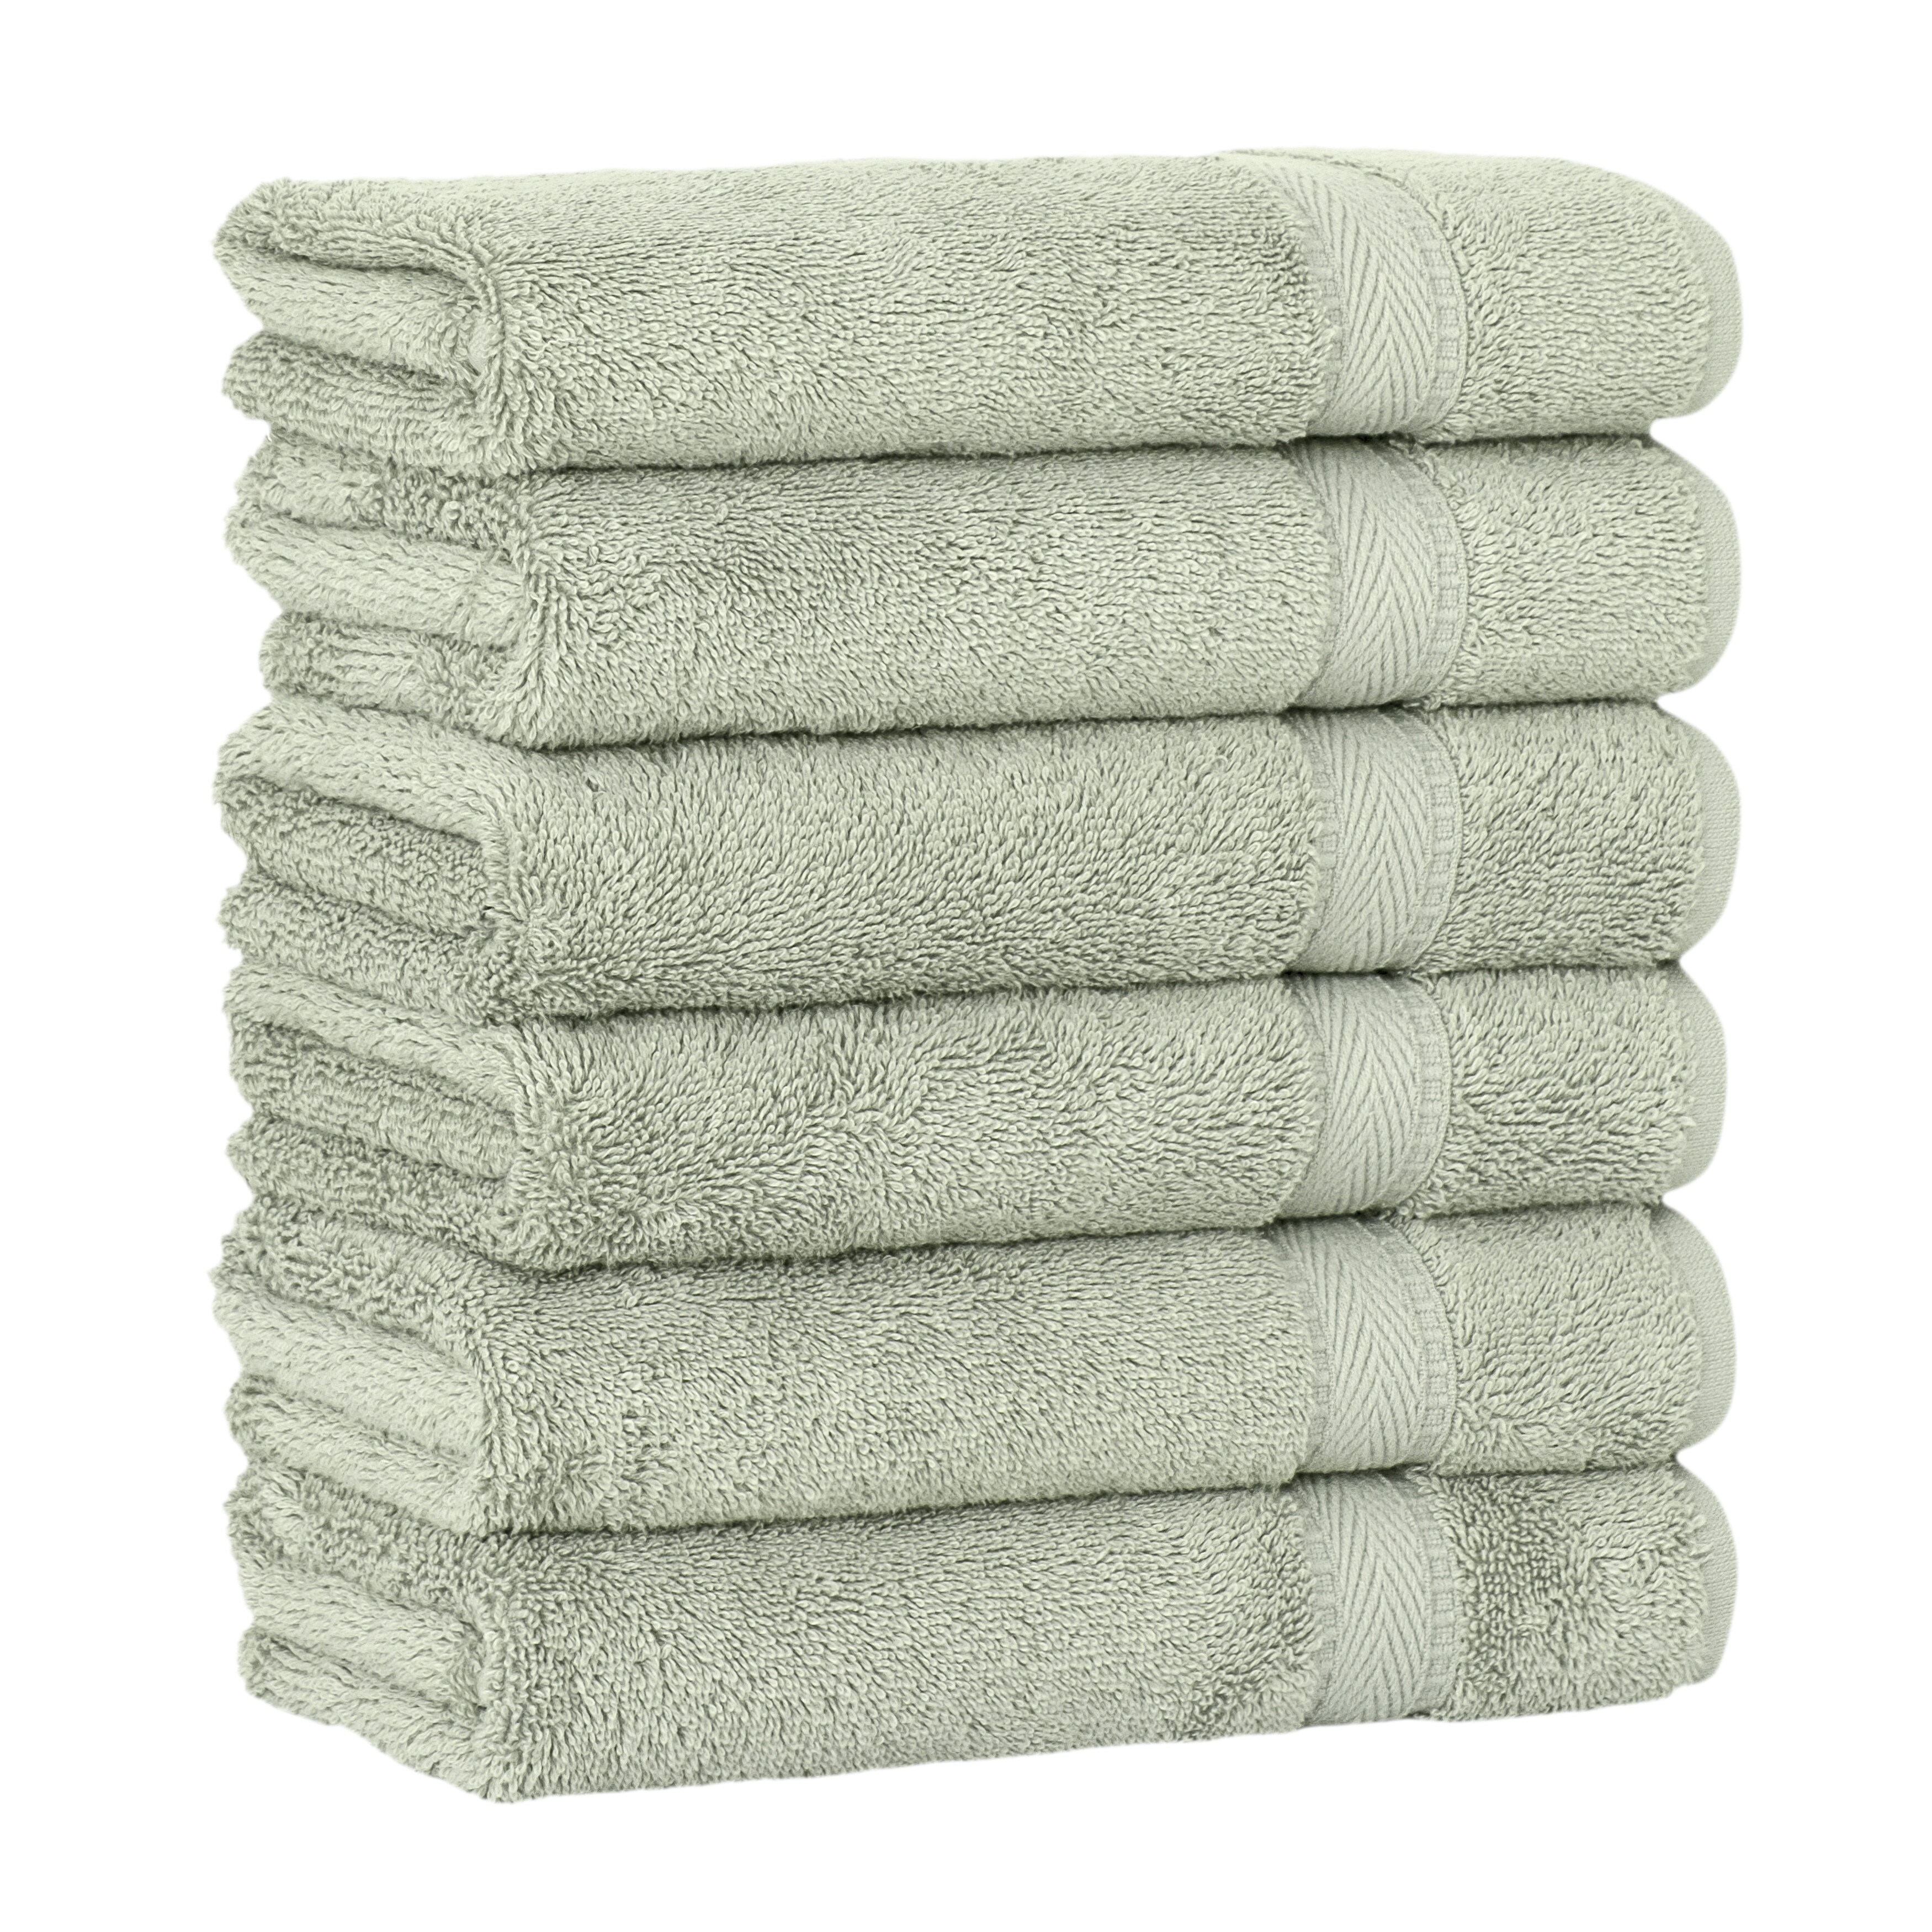 https://ak1.ostkcdn.com/images/products/is/images/direct/9a757067e4d63a80e299f002138845f51fa43426/Porch-%26-Den-Harcourt-Turkish-Cotton-Hand-Towel-%28Set-of-6%29.jpg